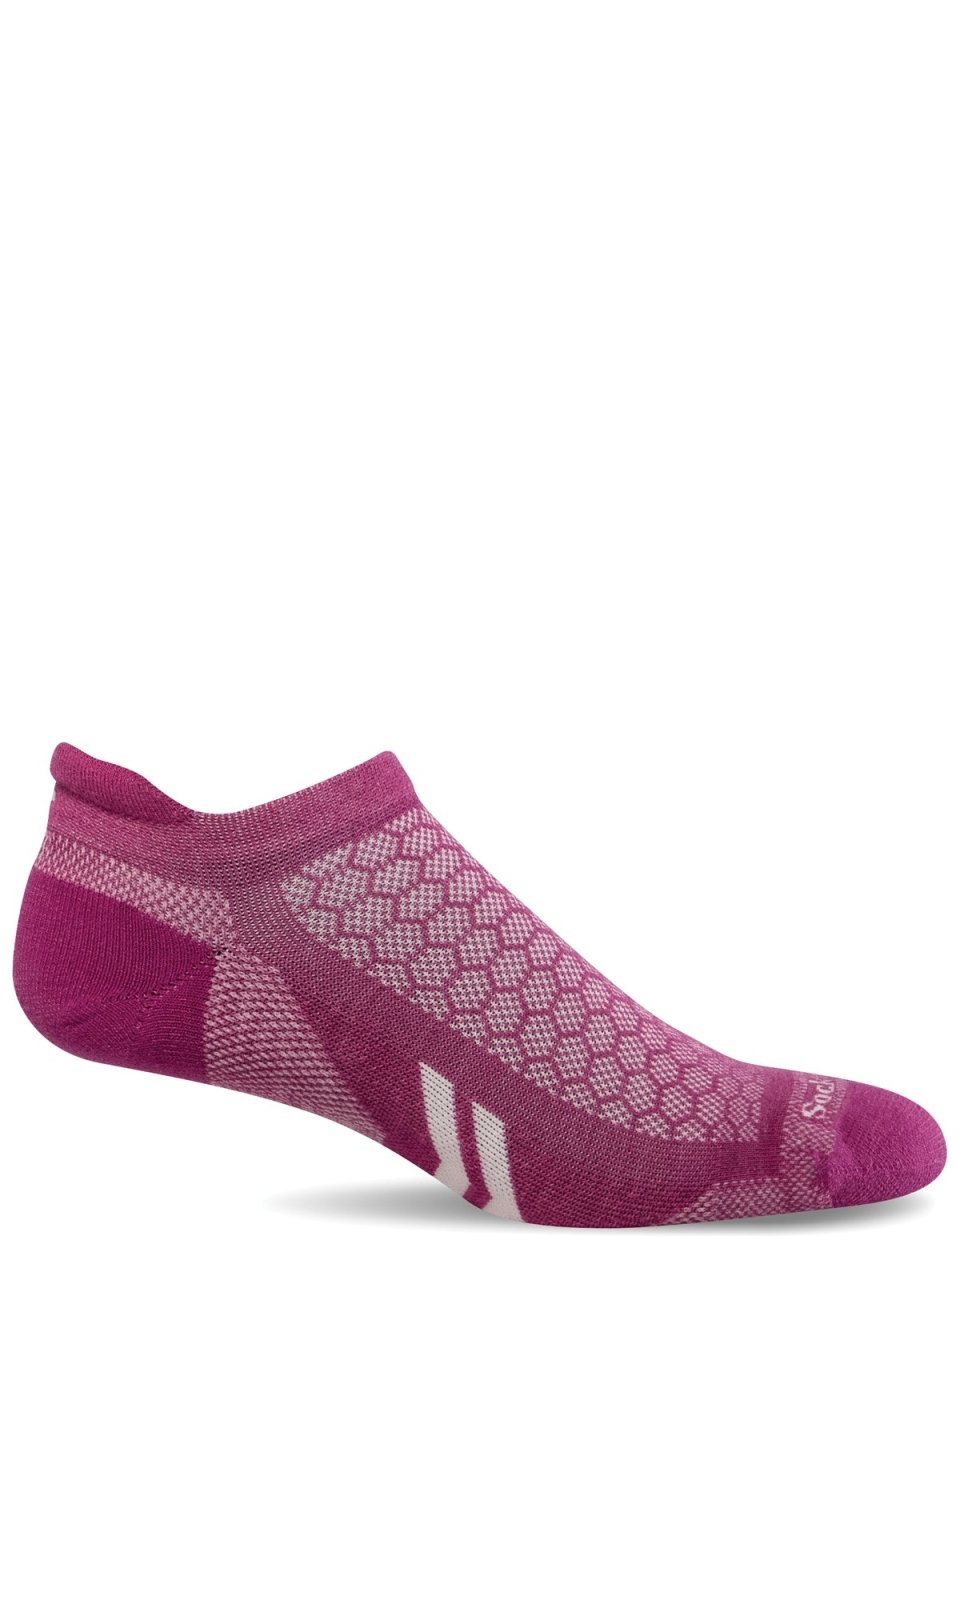 Sockwell Incline II Micro Moderate Compression Socks (Women's)